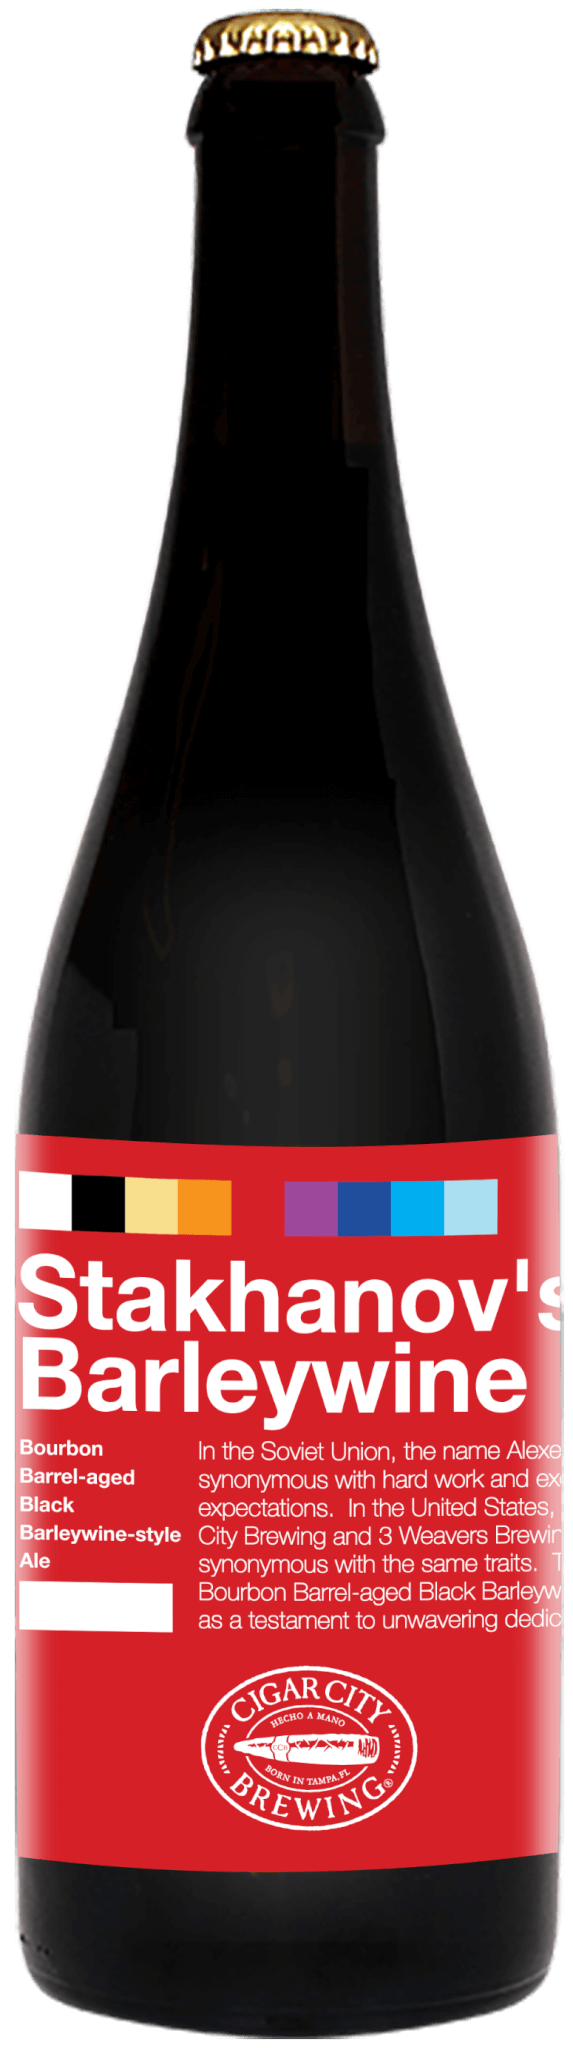 Stakhanov's Barleywine